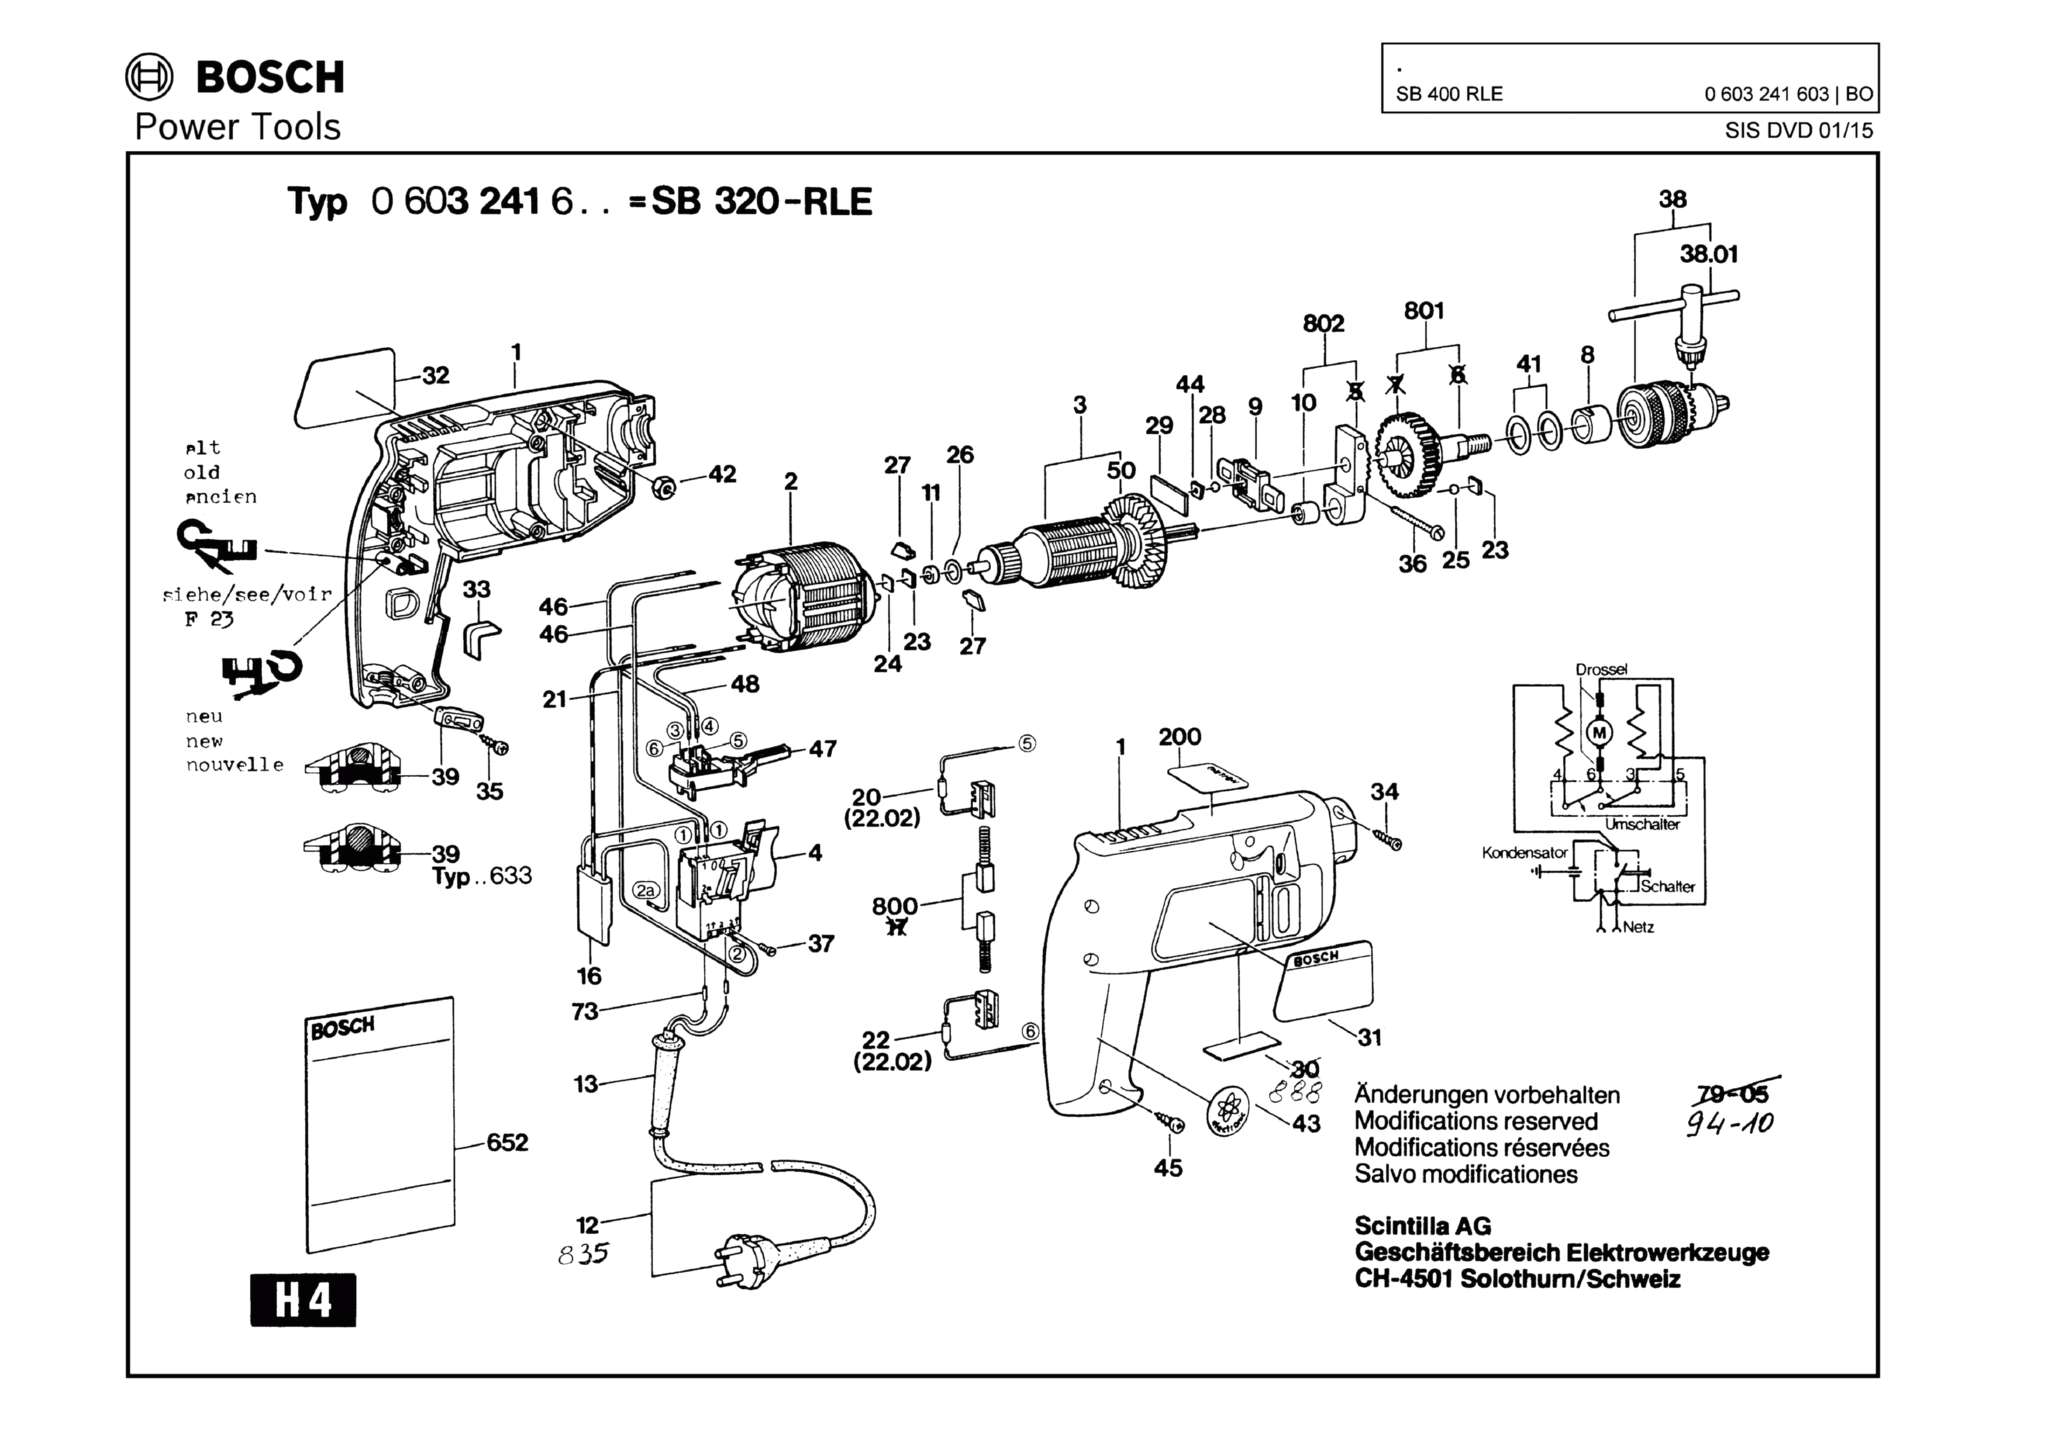 Запчасти, схема и деталировка Bosch SB 400 RLE (ТИП 0603241603)